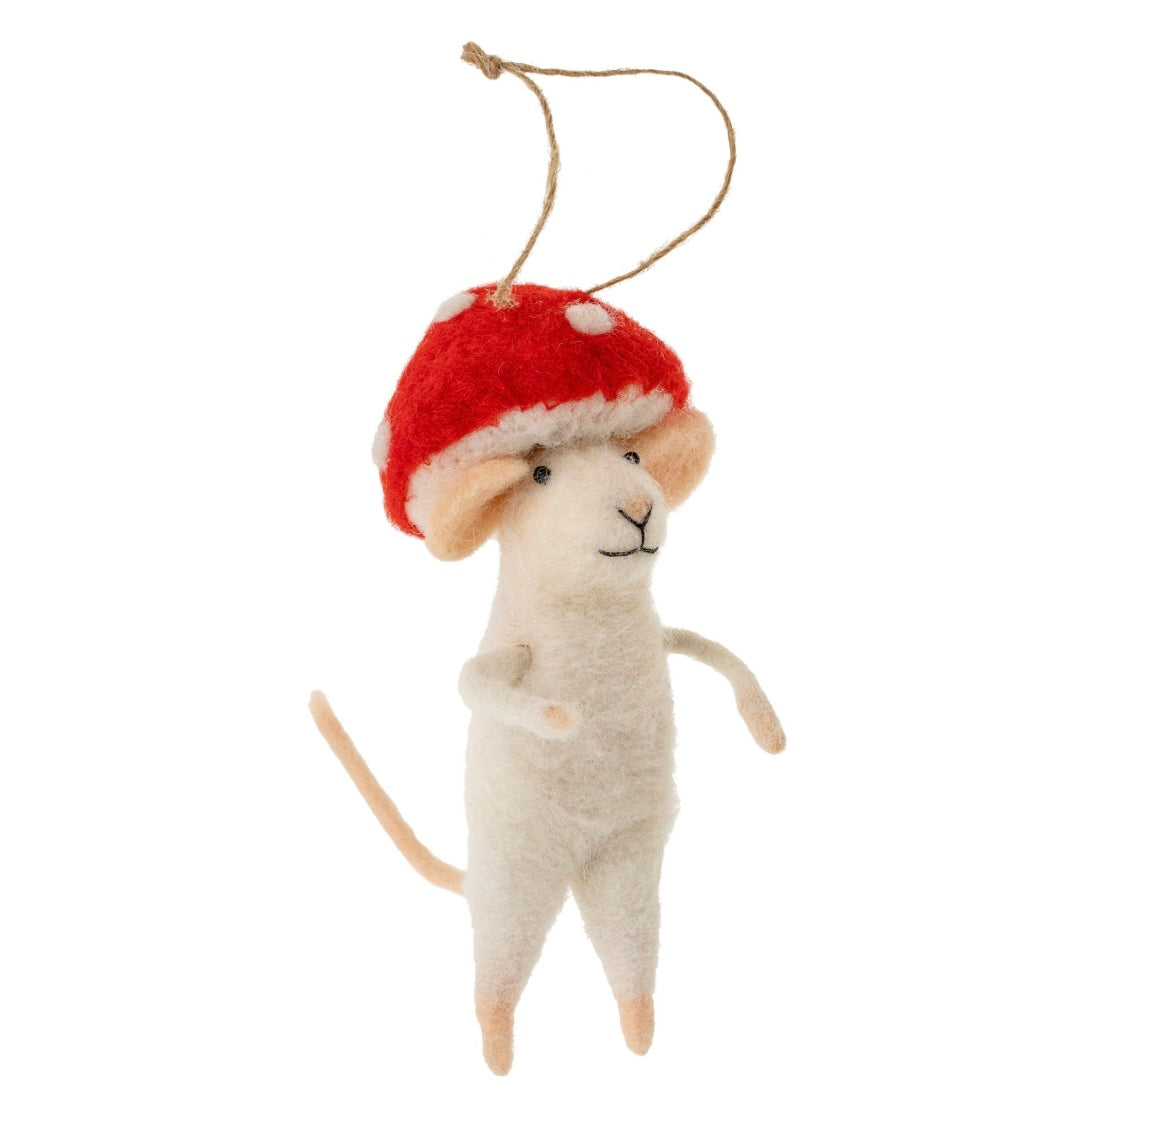 Felt Mouse Ornament: “Mushroom Mouse”